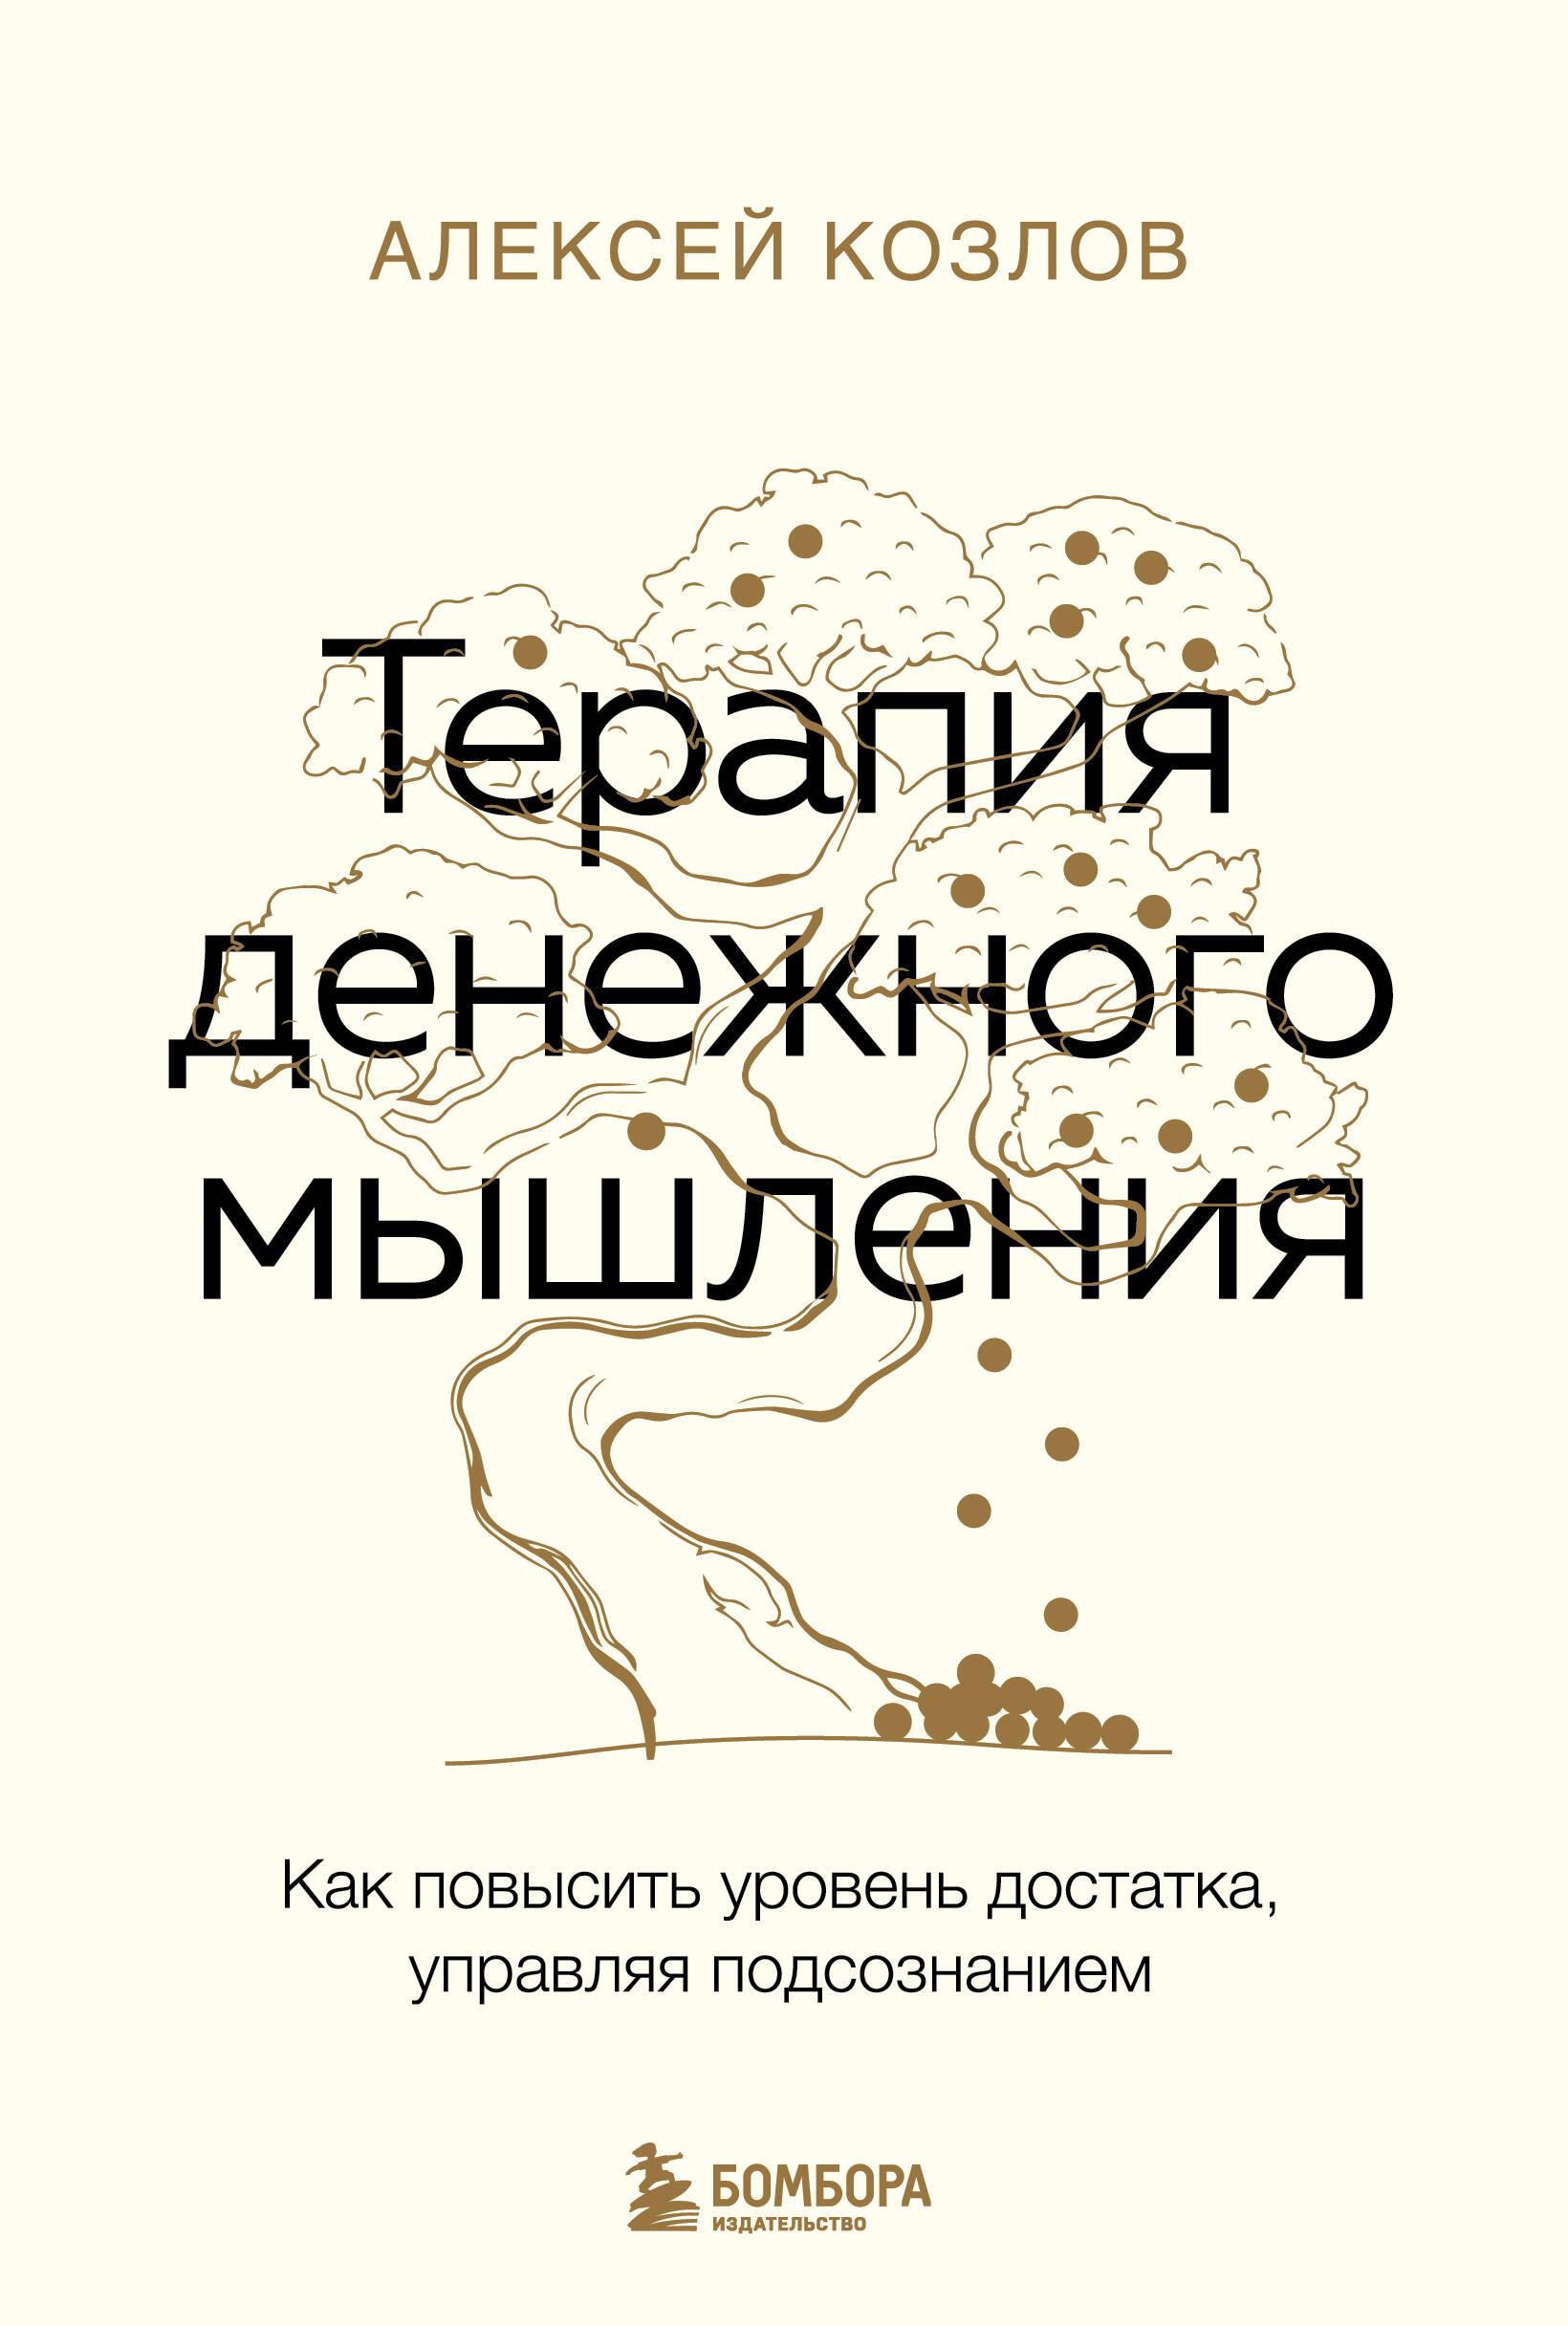 https://cdn.book24.ru/v2/ITD000000001357118/COVER/cover13d.jpg